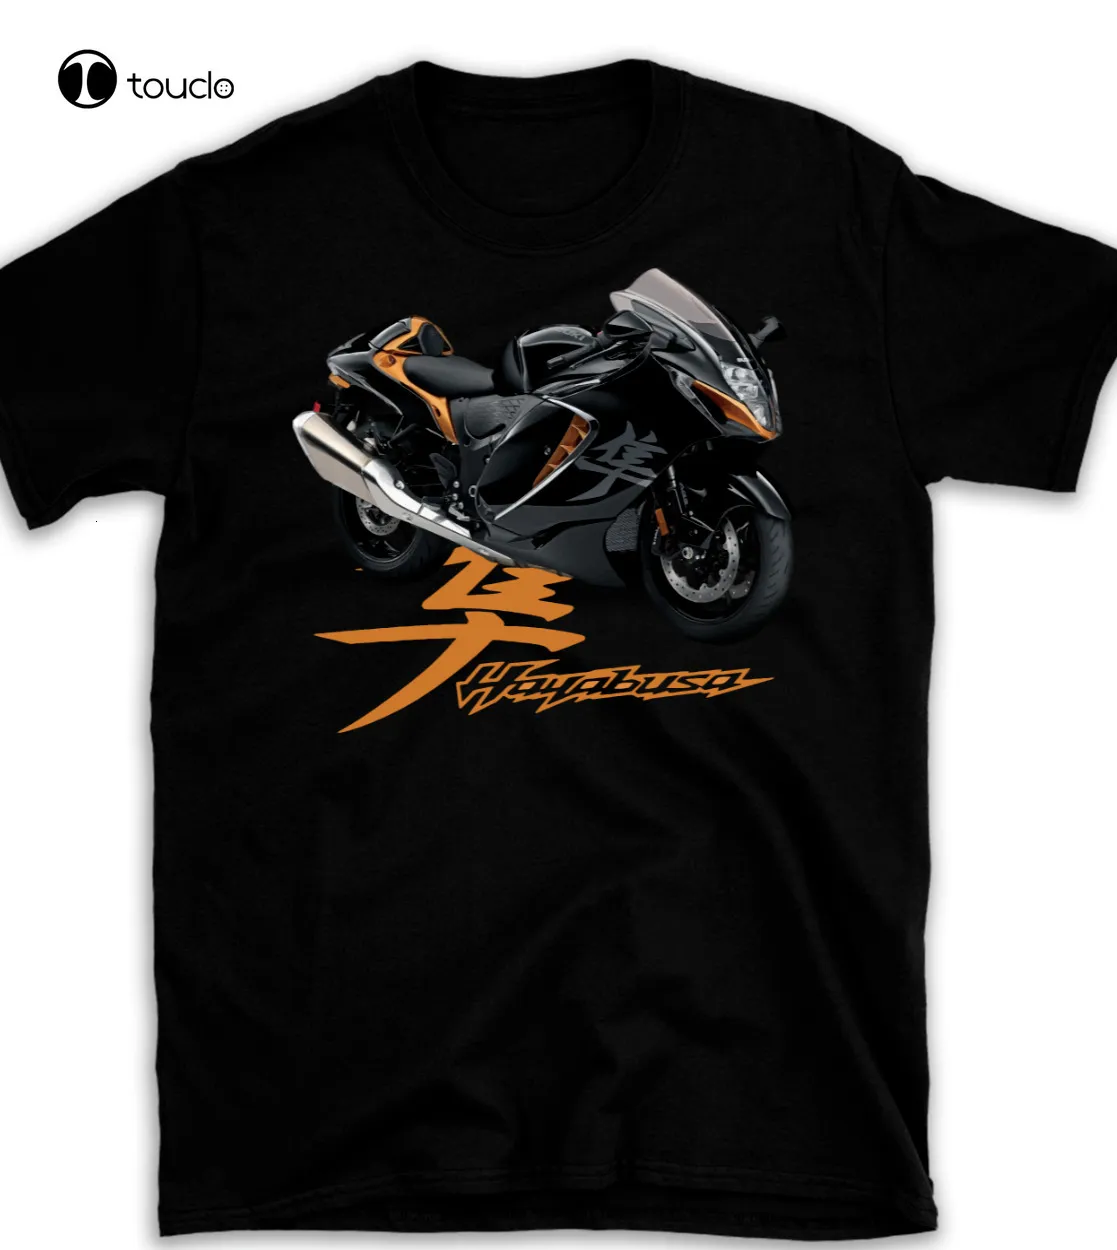 Homens camisetas Motocicleta Camiseta Impressa Inspirada por Suzu Camiseta S-5Xl 230920